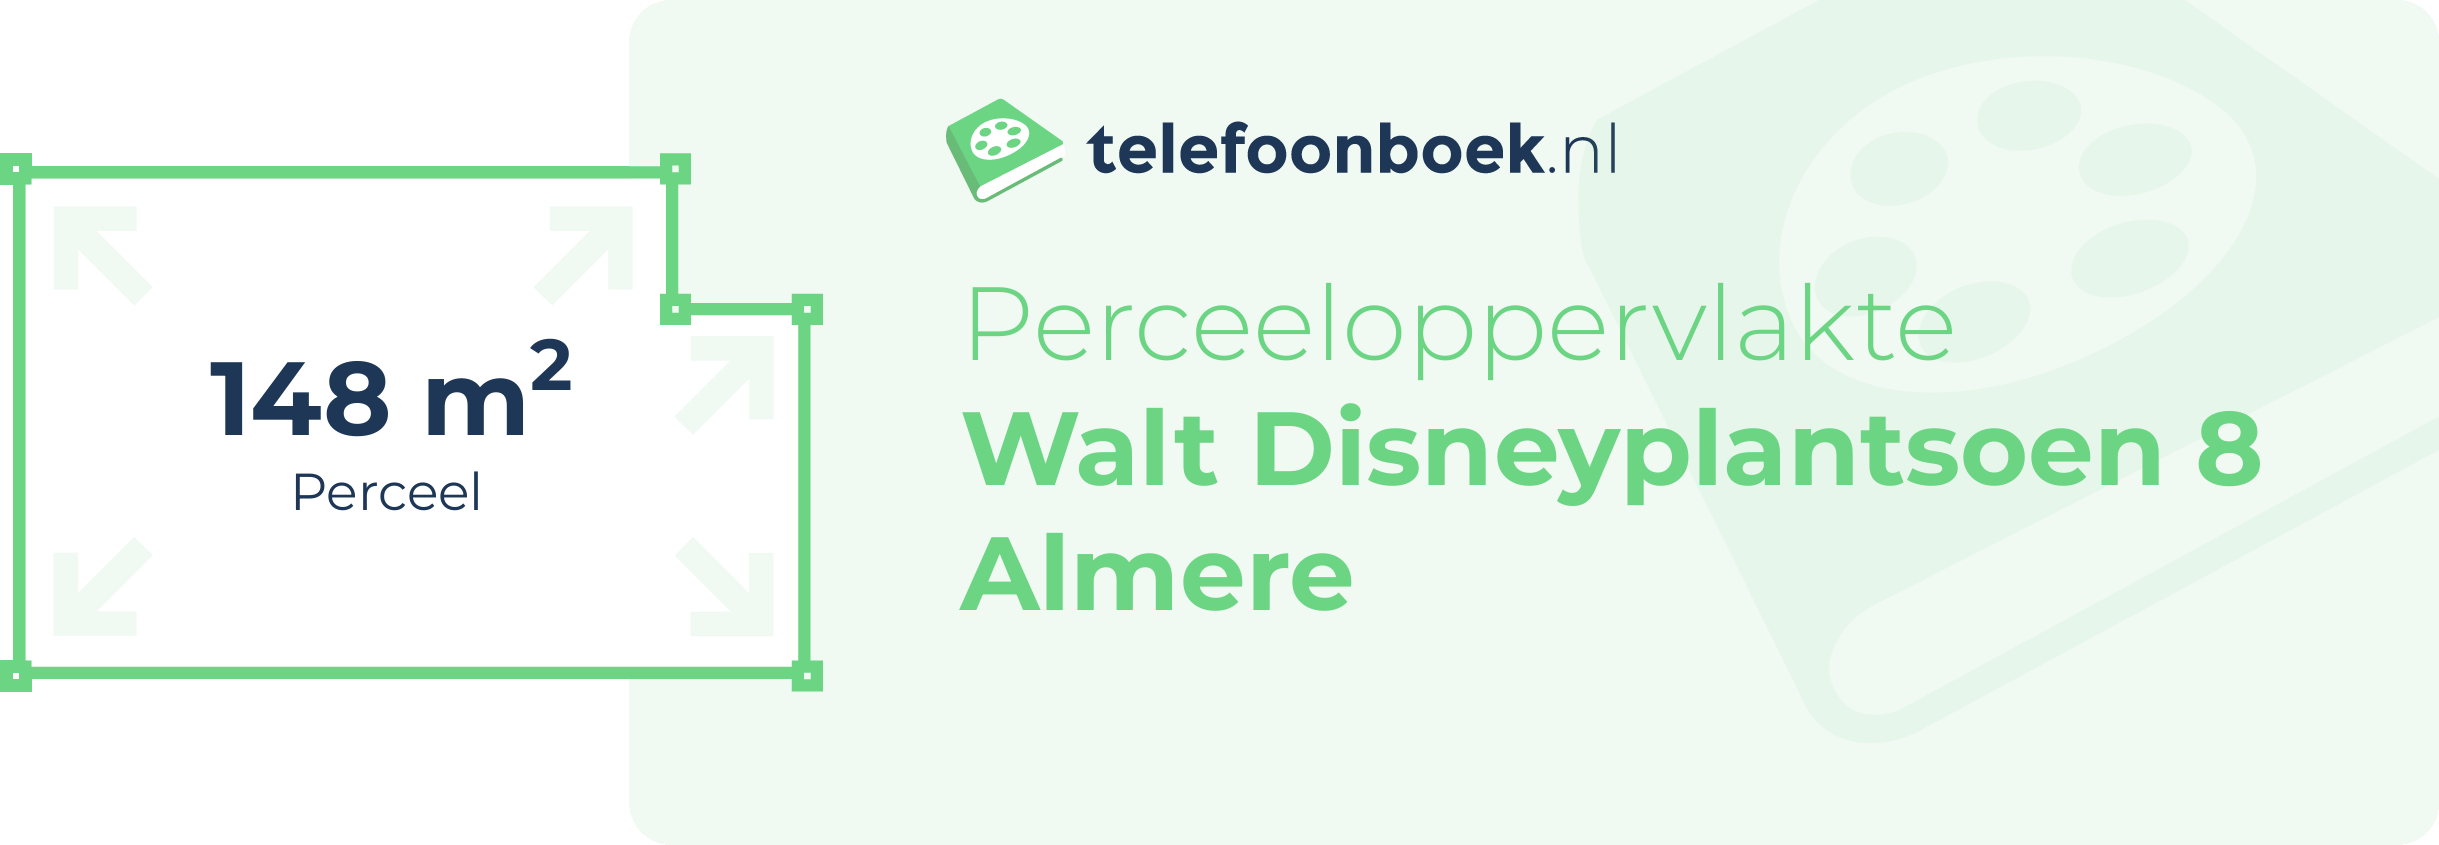 Perceeloppervlakte Walt Disneyplantsoen 8 Almere